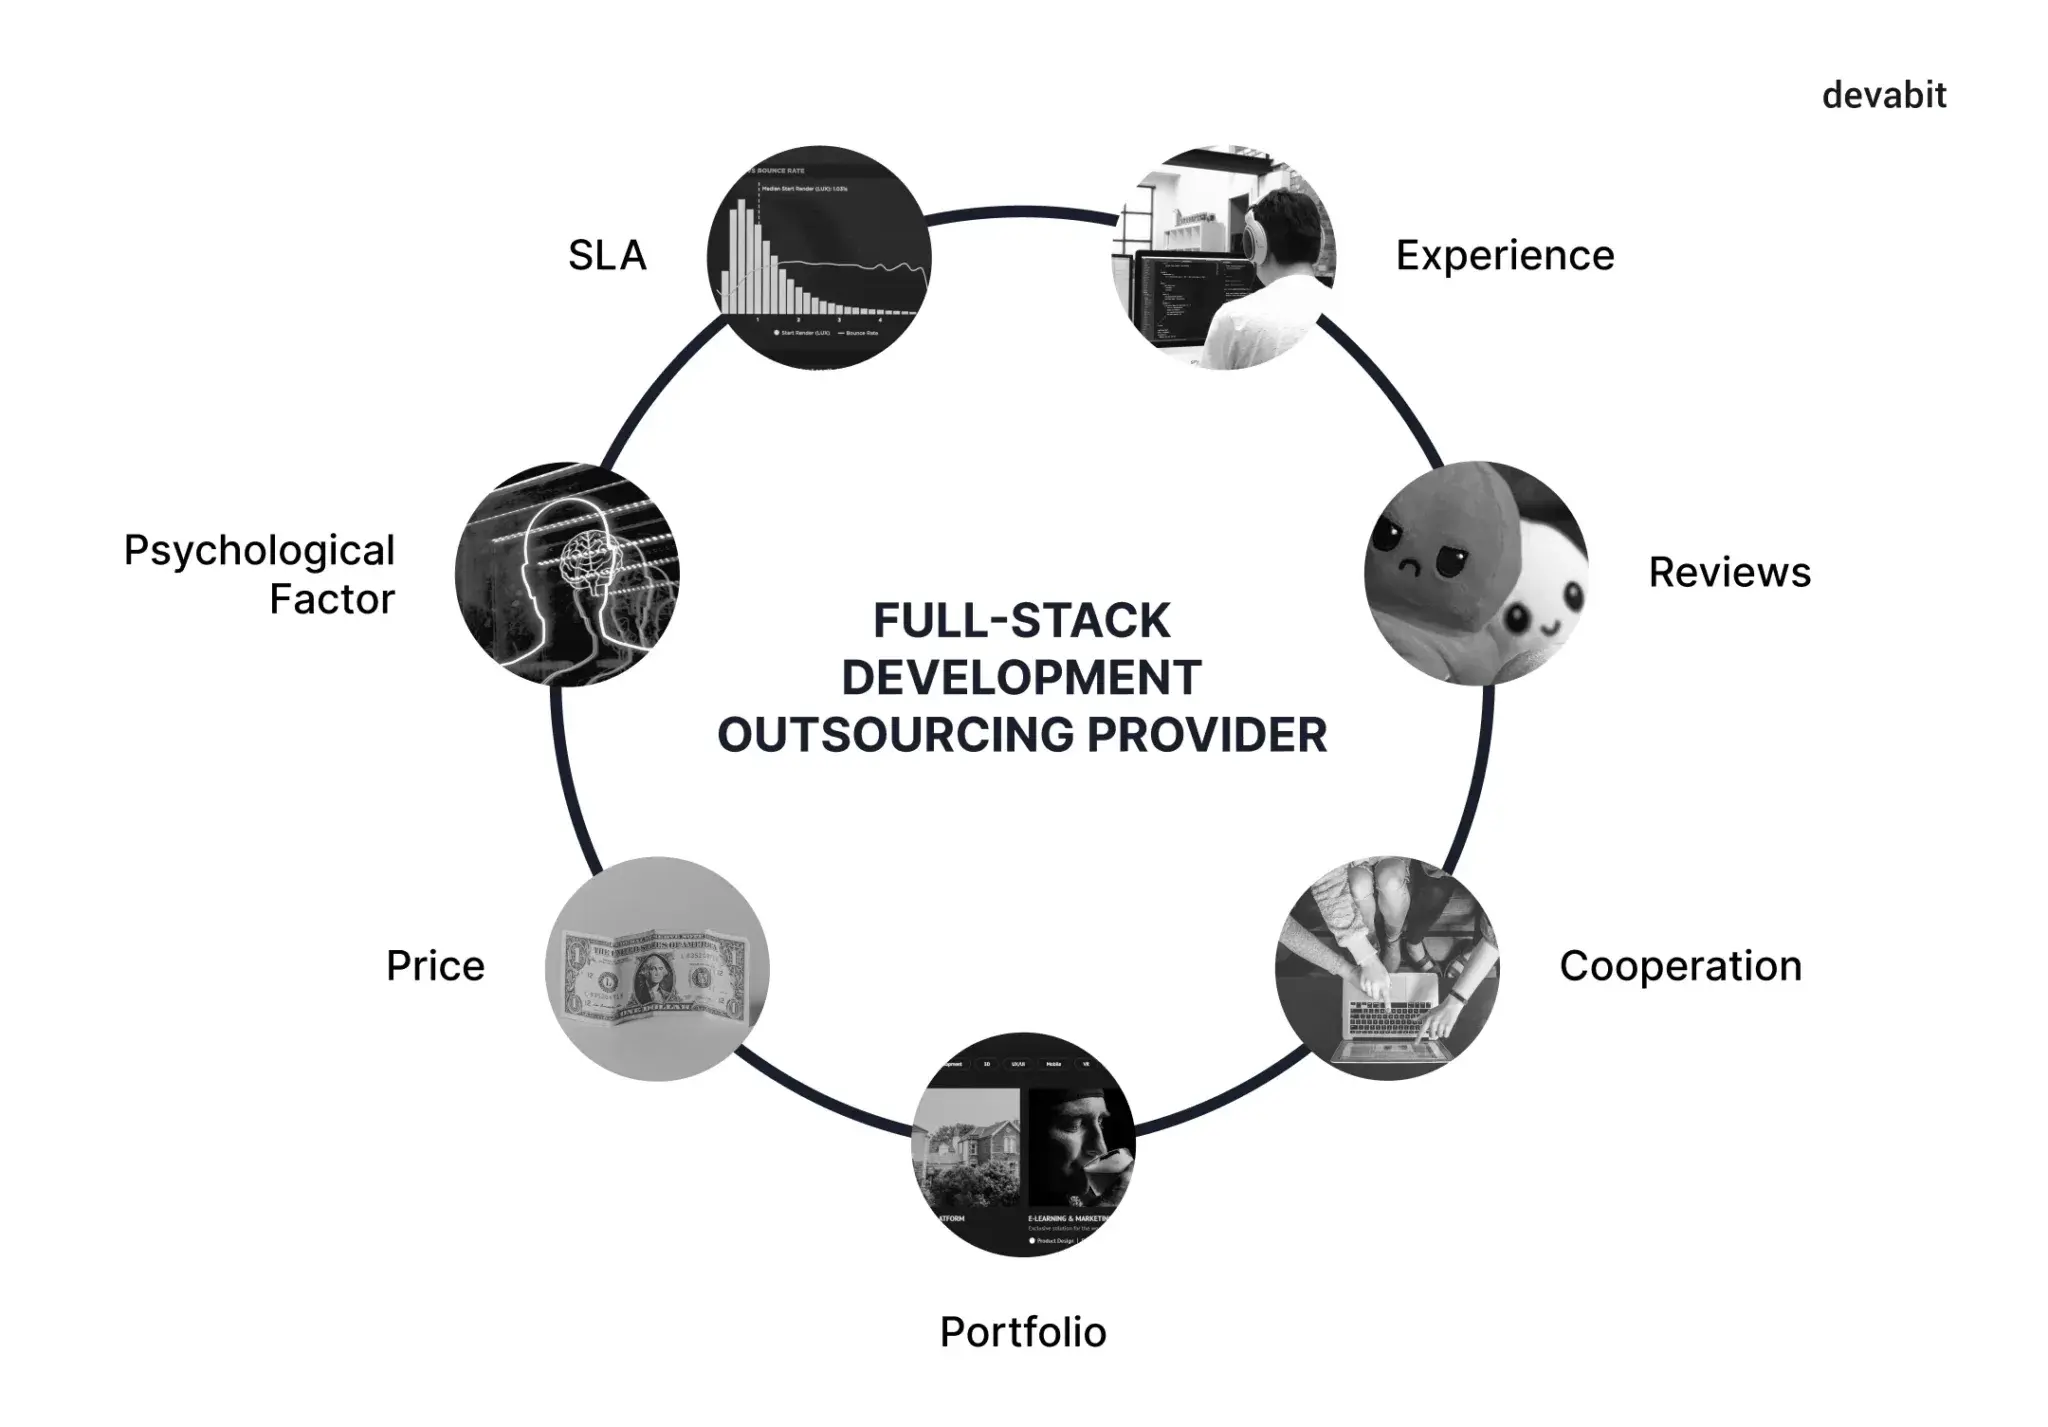 Full-stack development outsourcing provider